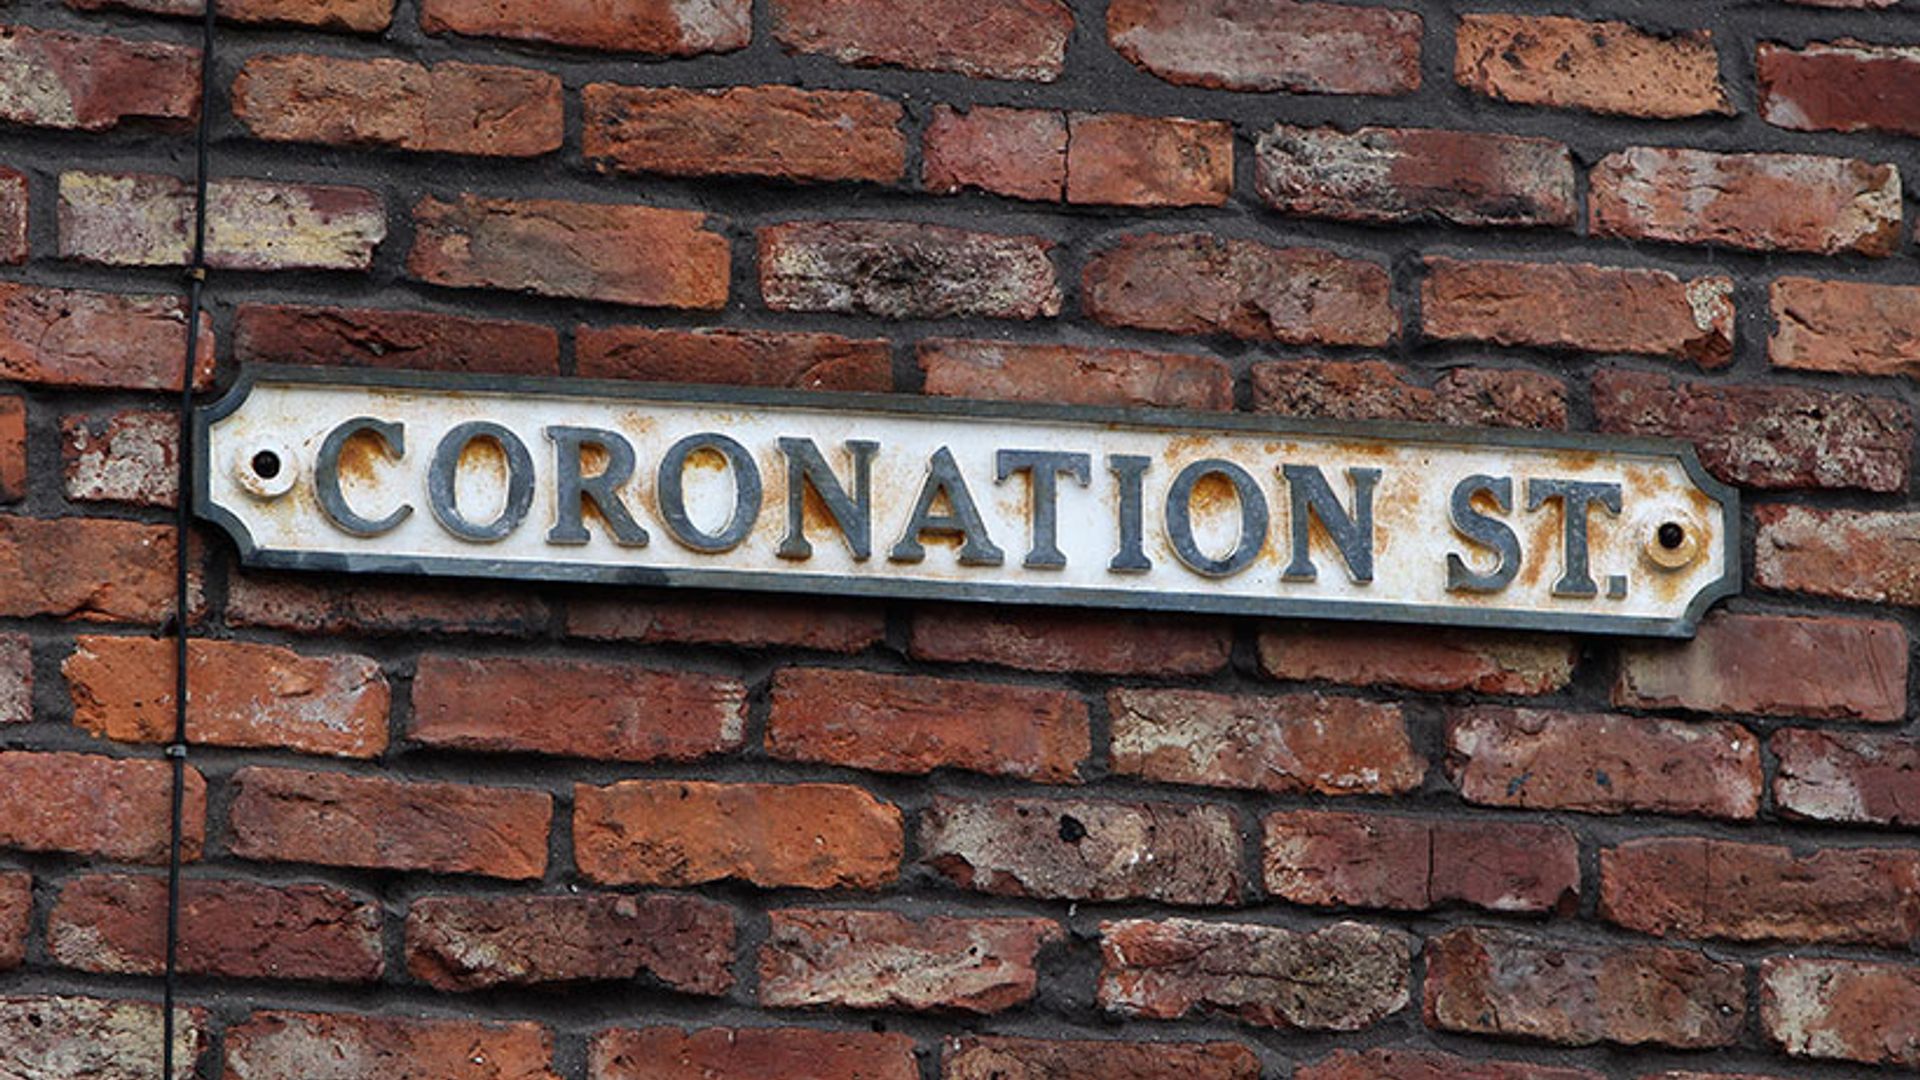 coronation street street sign